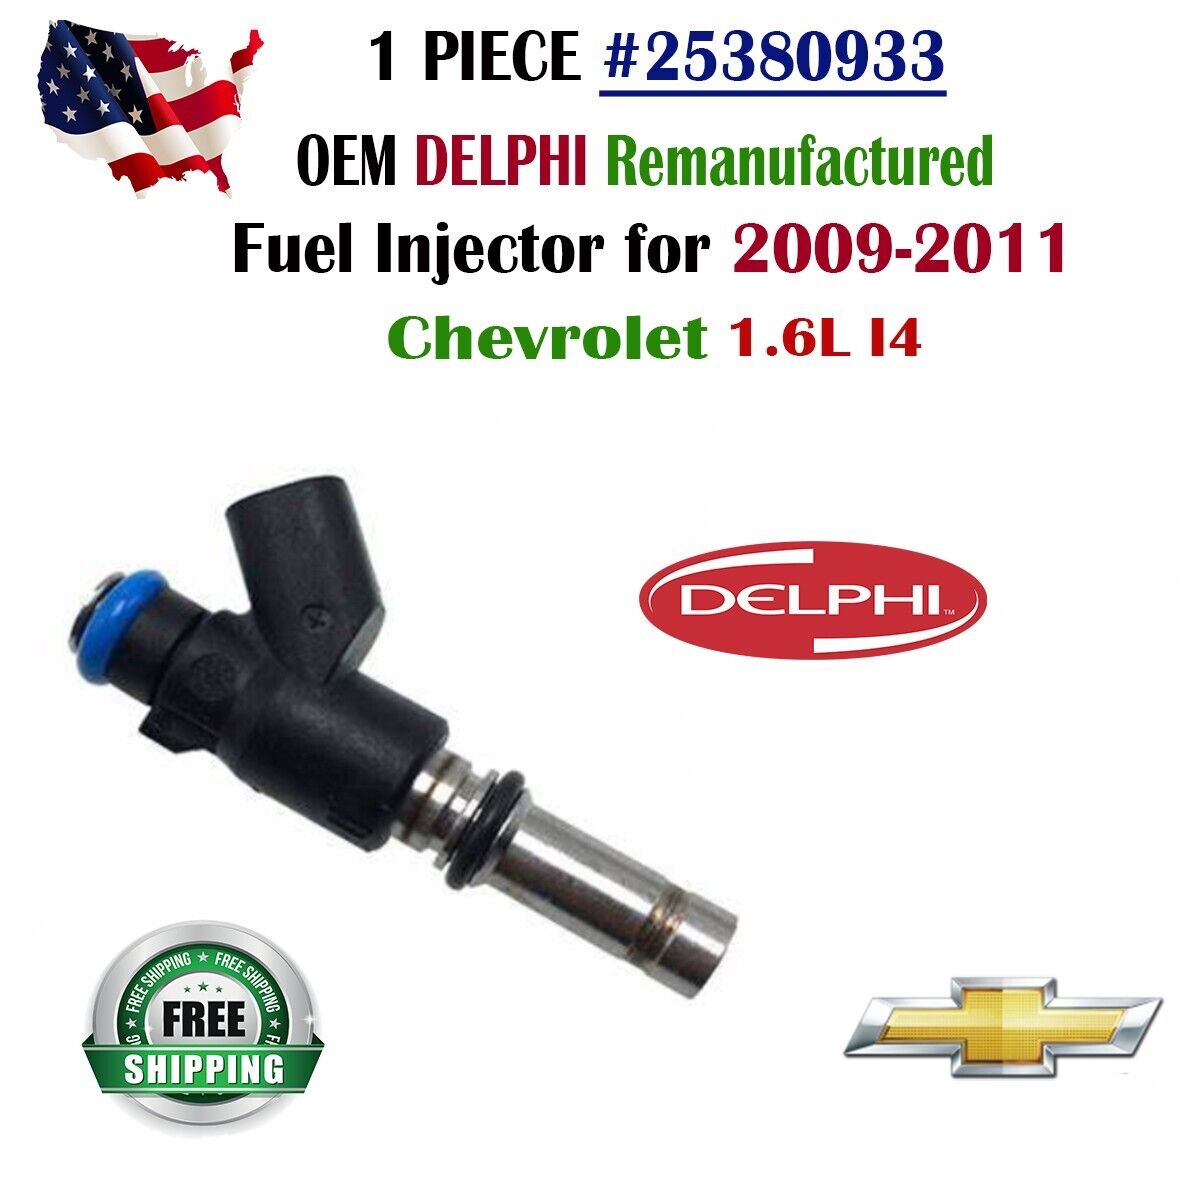 GENUINE Delphi x1 PIECE Fuel Injector for 2009-2011 Chevrolet 1.6L I4 #25380933